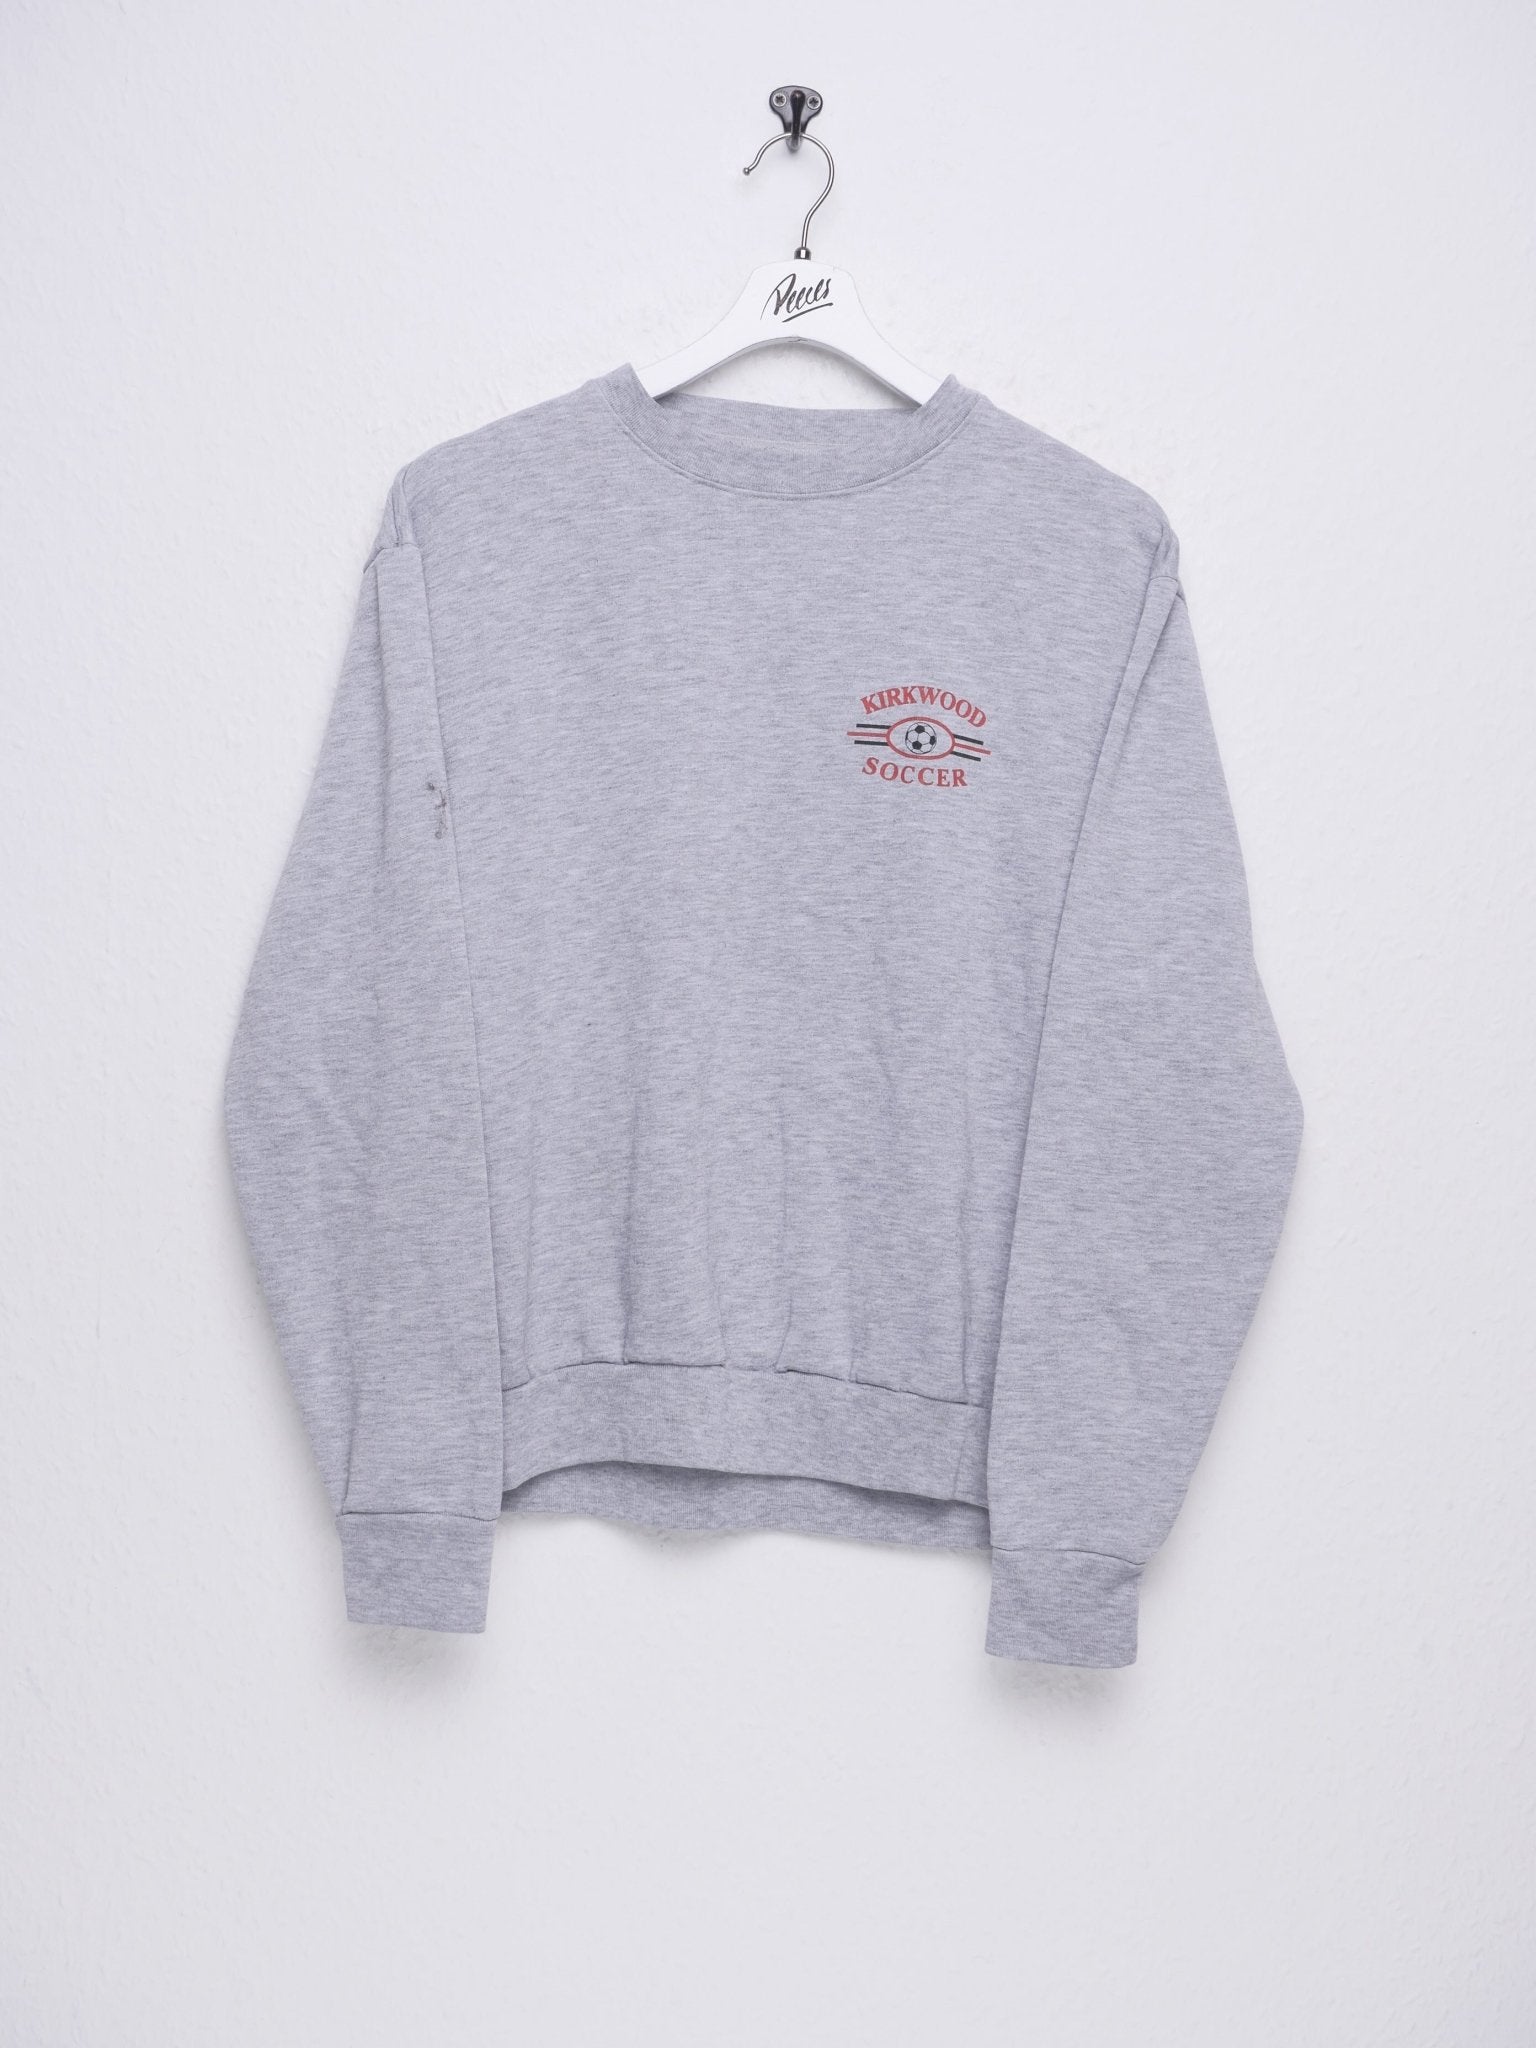 Kirkwood Soccer grey Sweater - Peeces